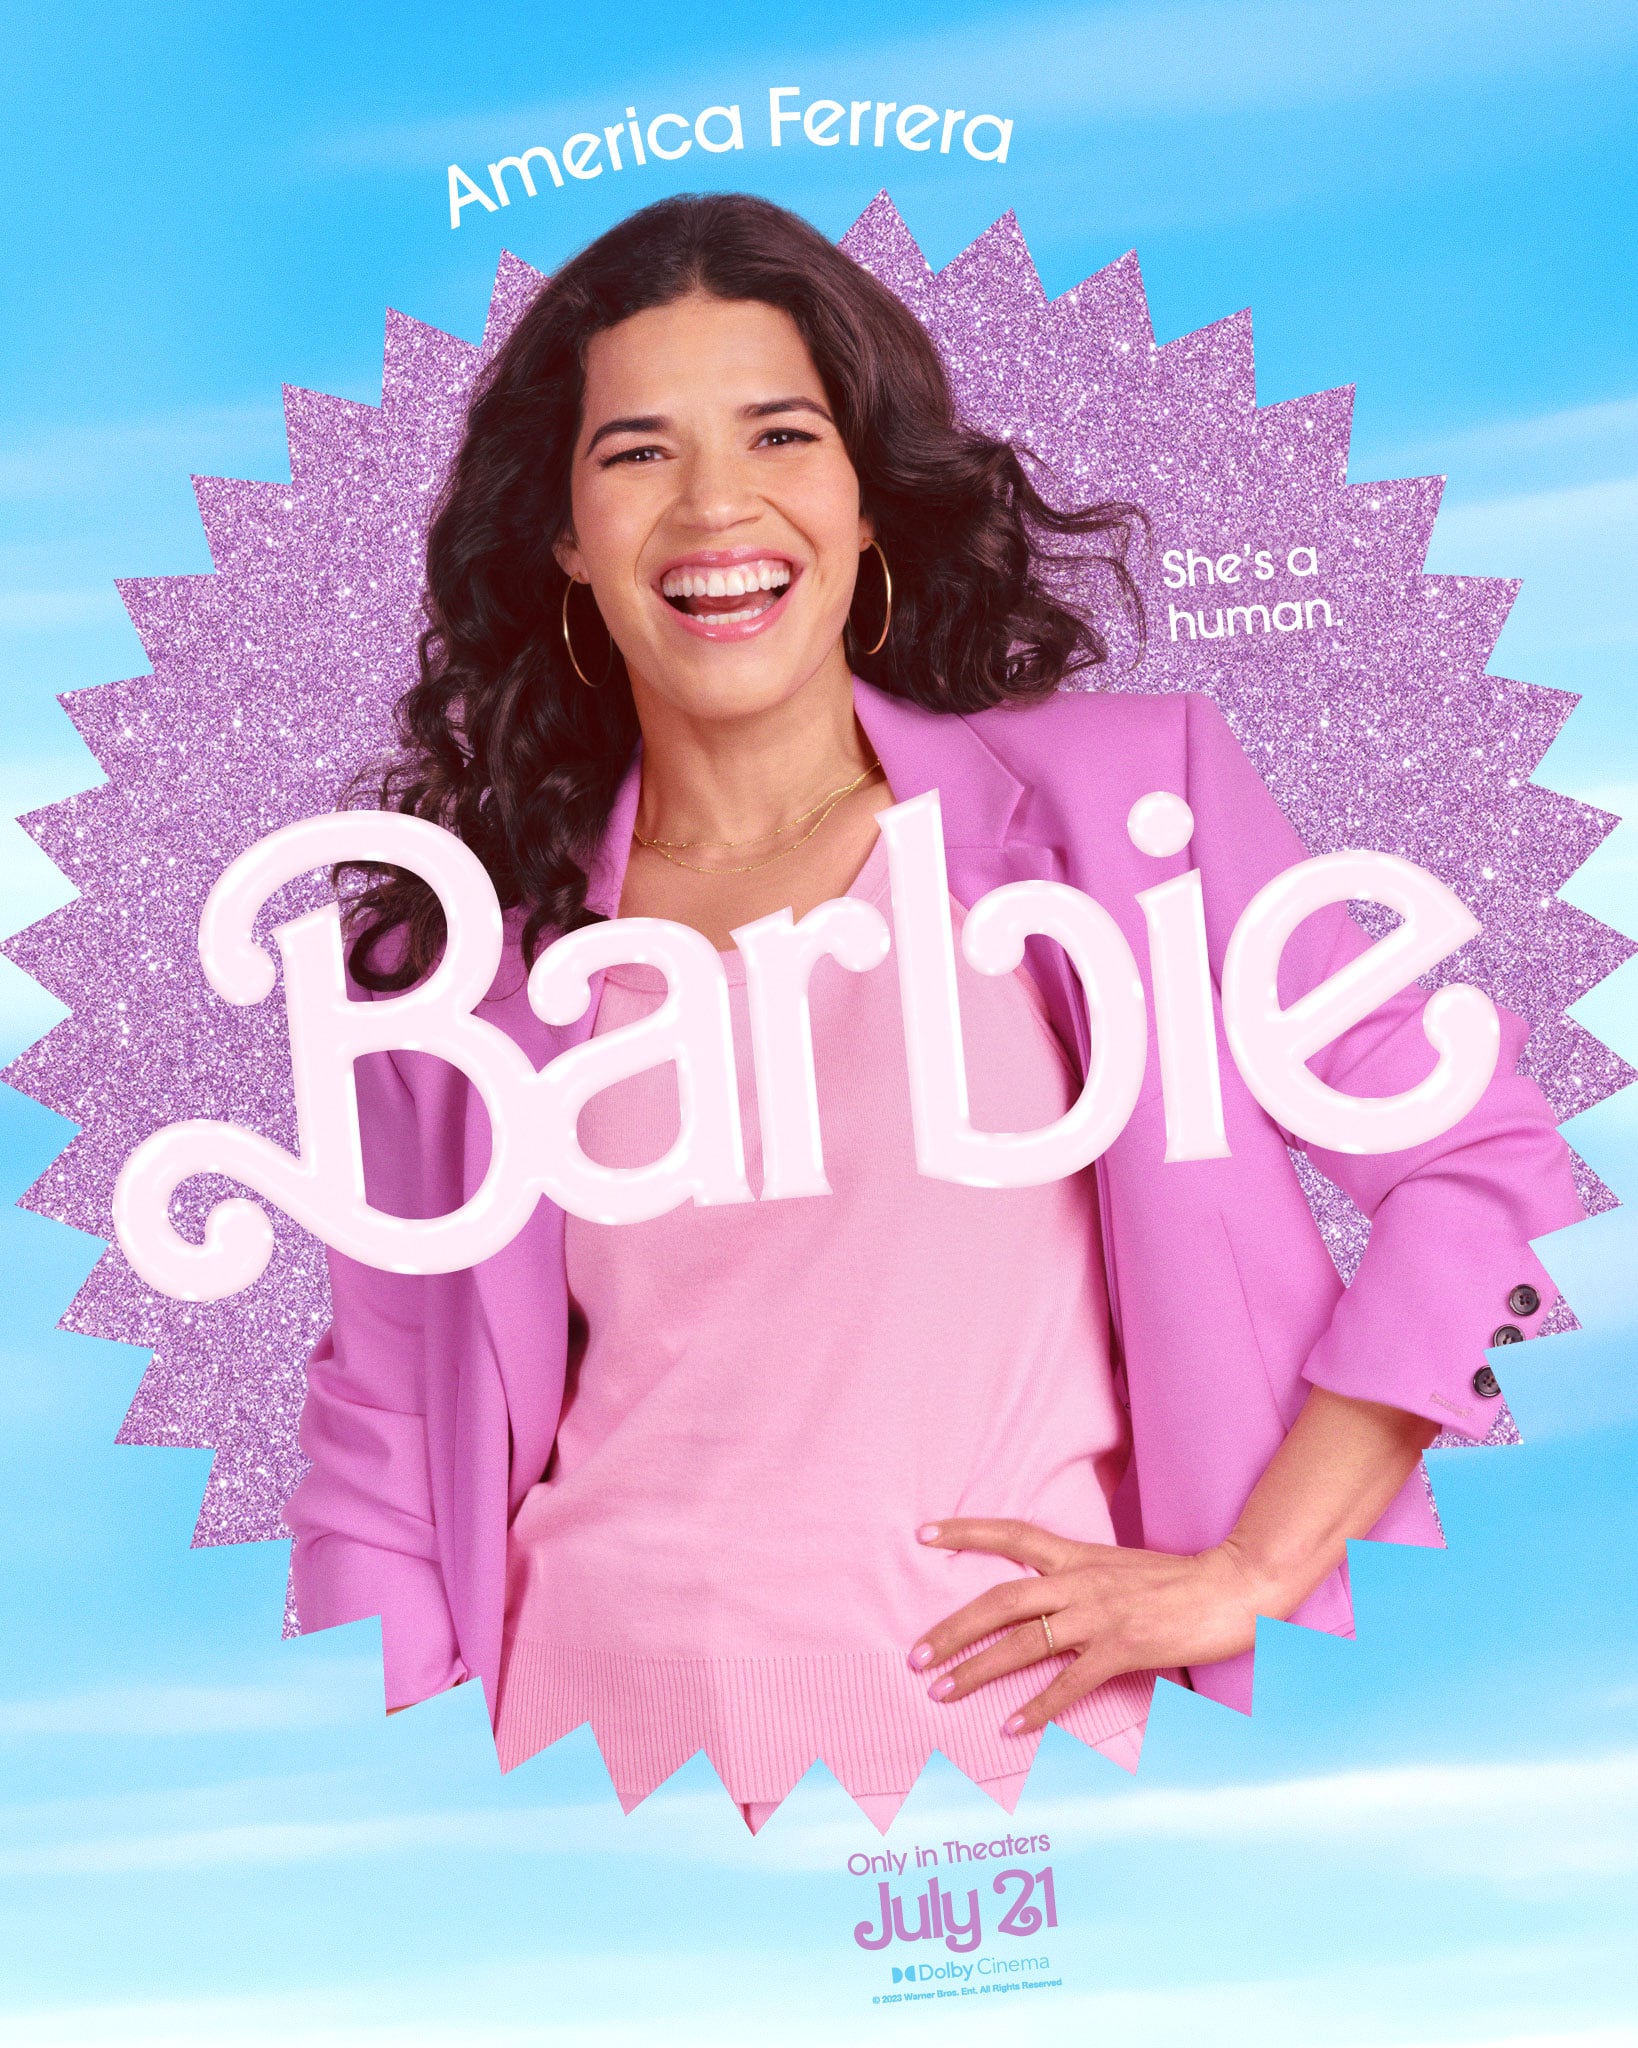 America Ferrera Barbie movie poster